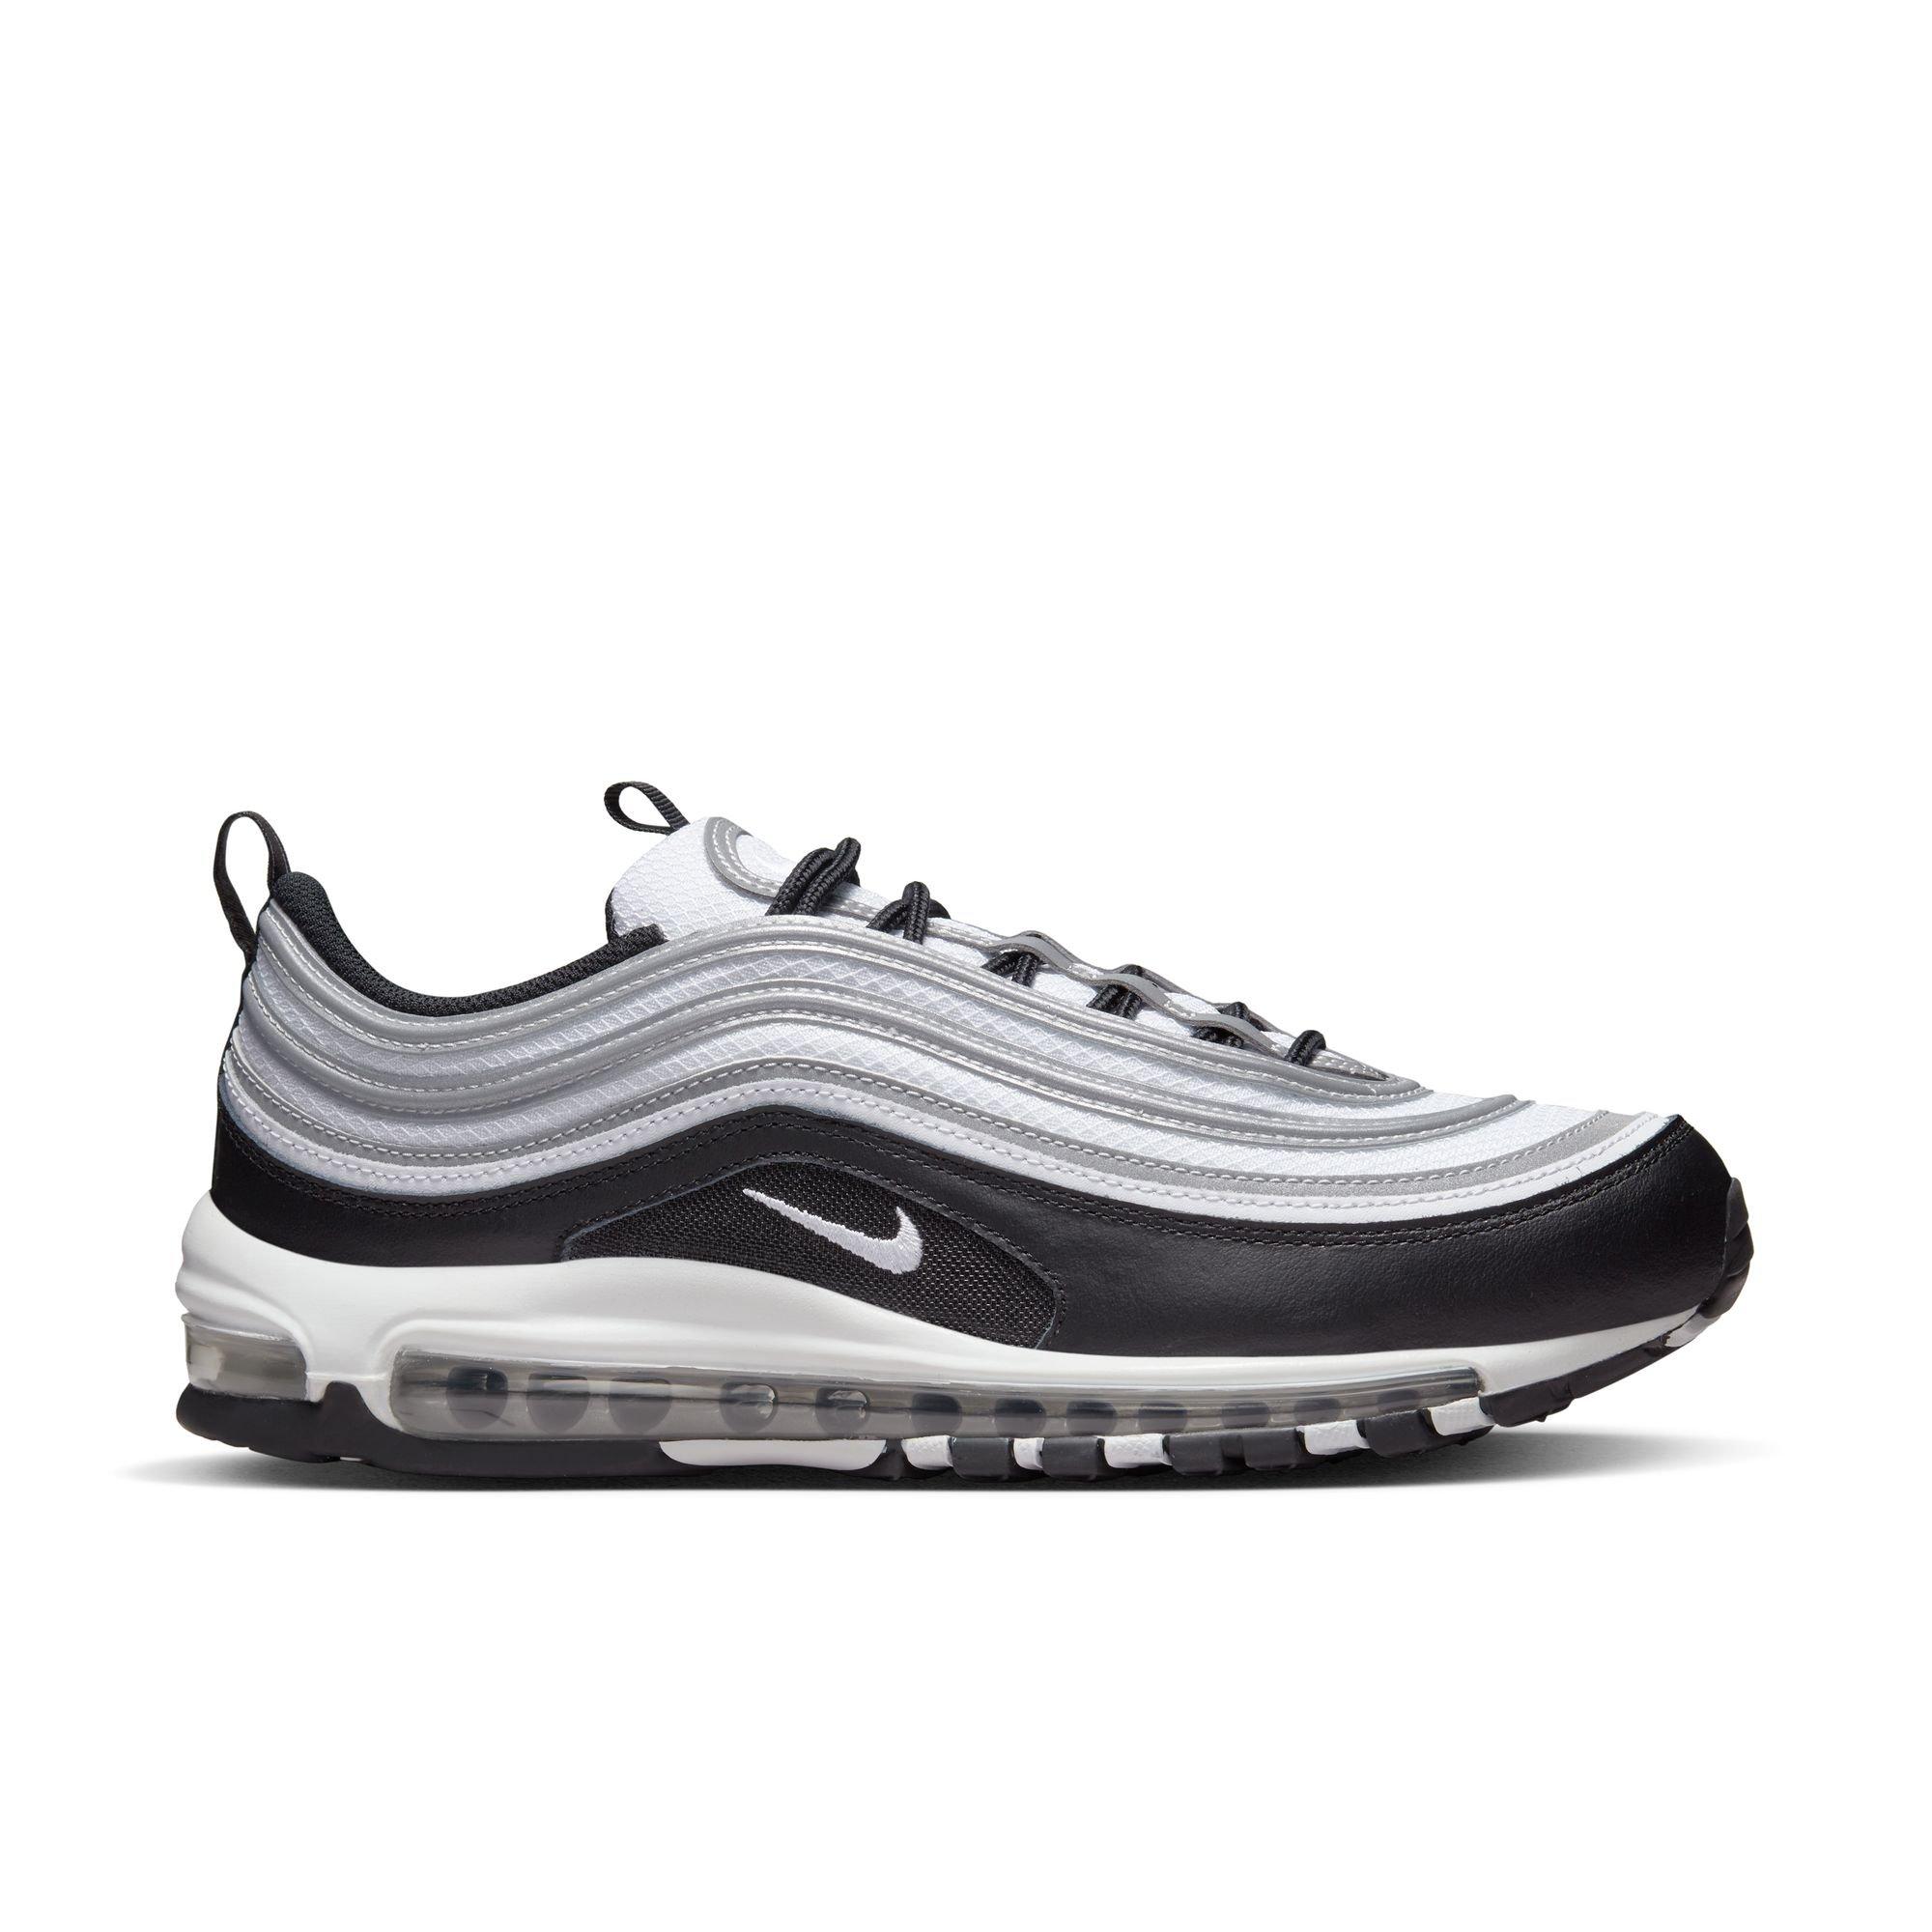 Nike Max 97 "Black/White/Reflect Silver" Men's